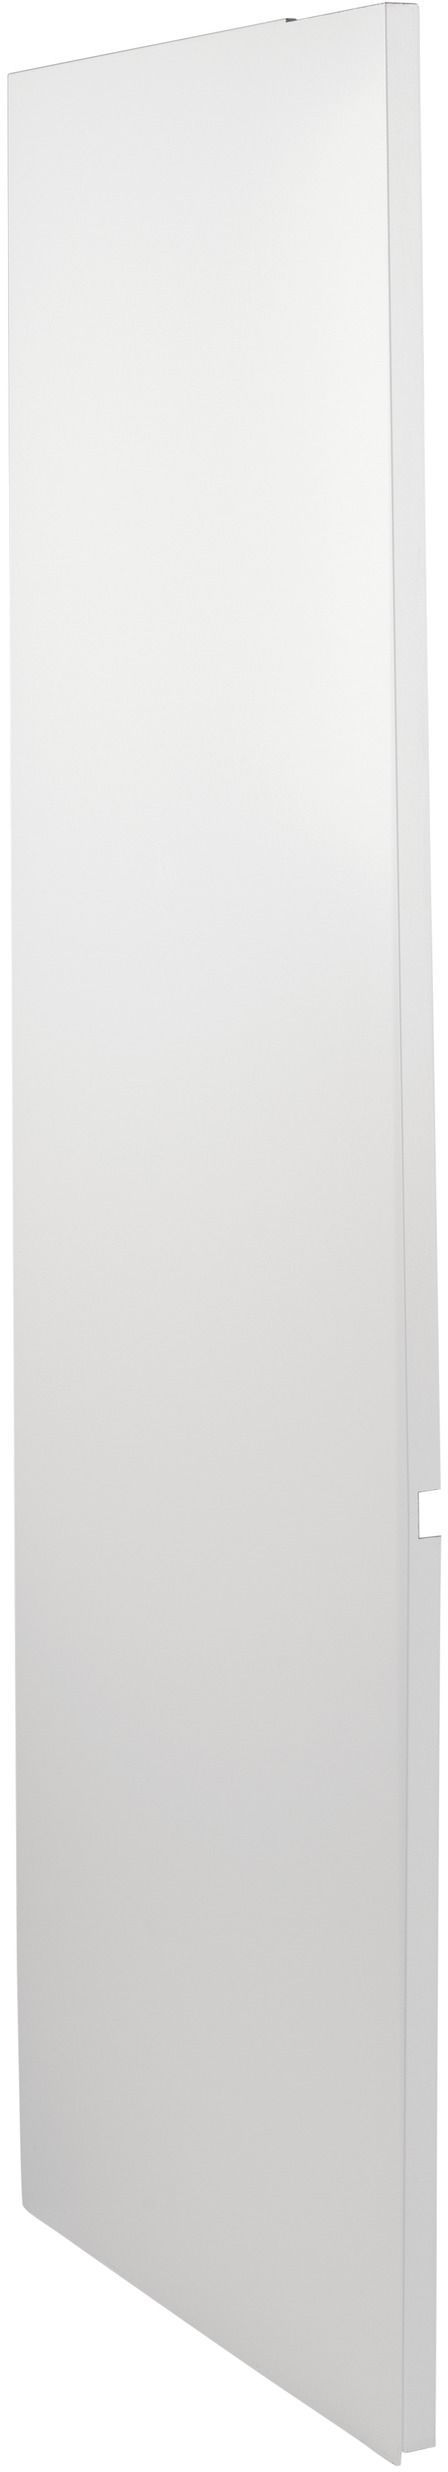 Café™ Matte White Refrigeration Side Panel-Left 0